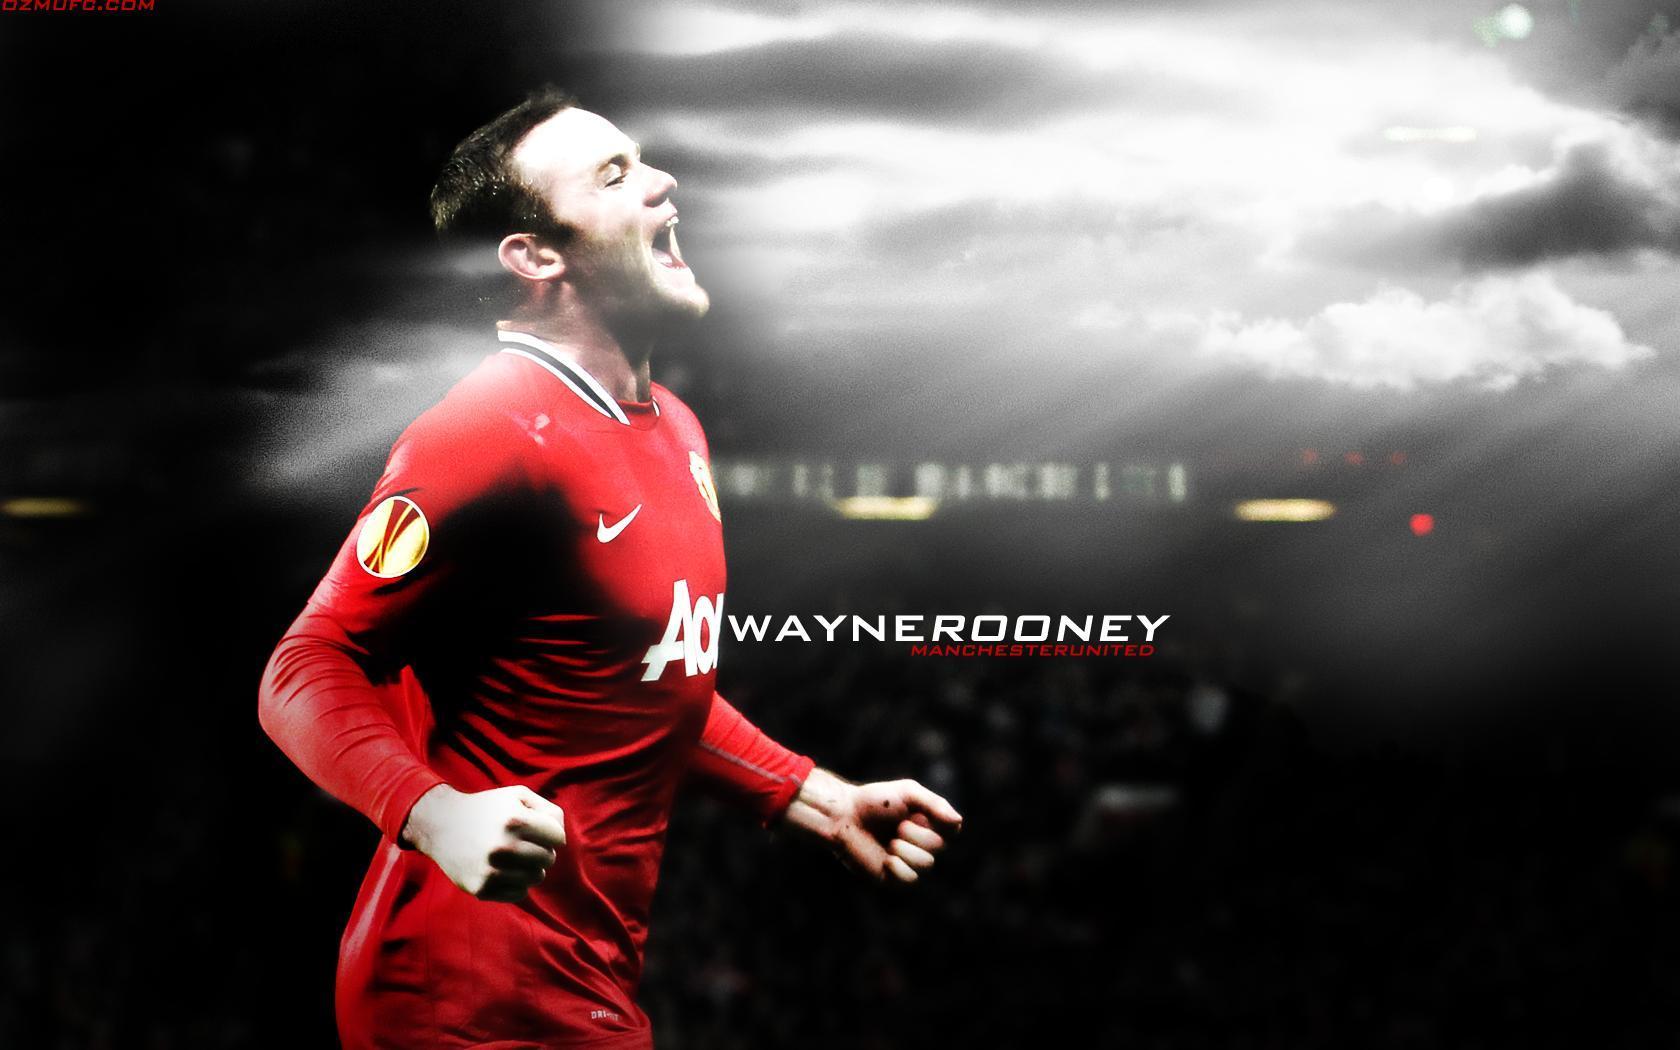 Fonds d&;écran Wayne Rooney, tous les wallpaper Wayne Rooney